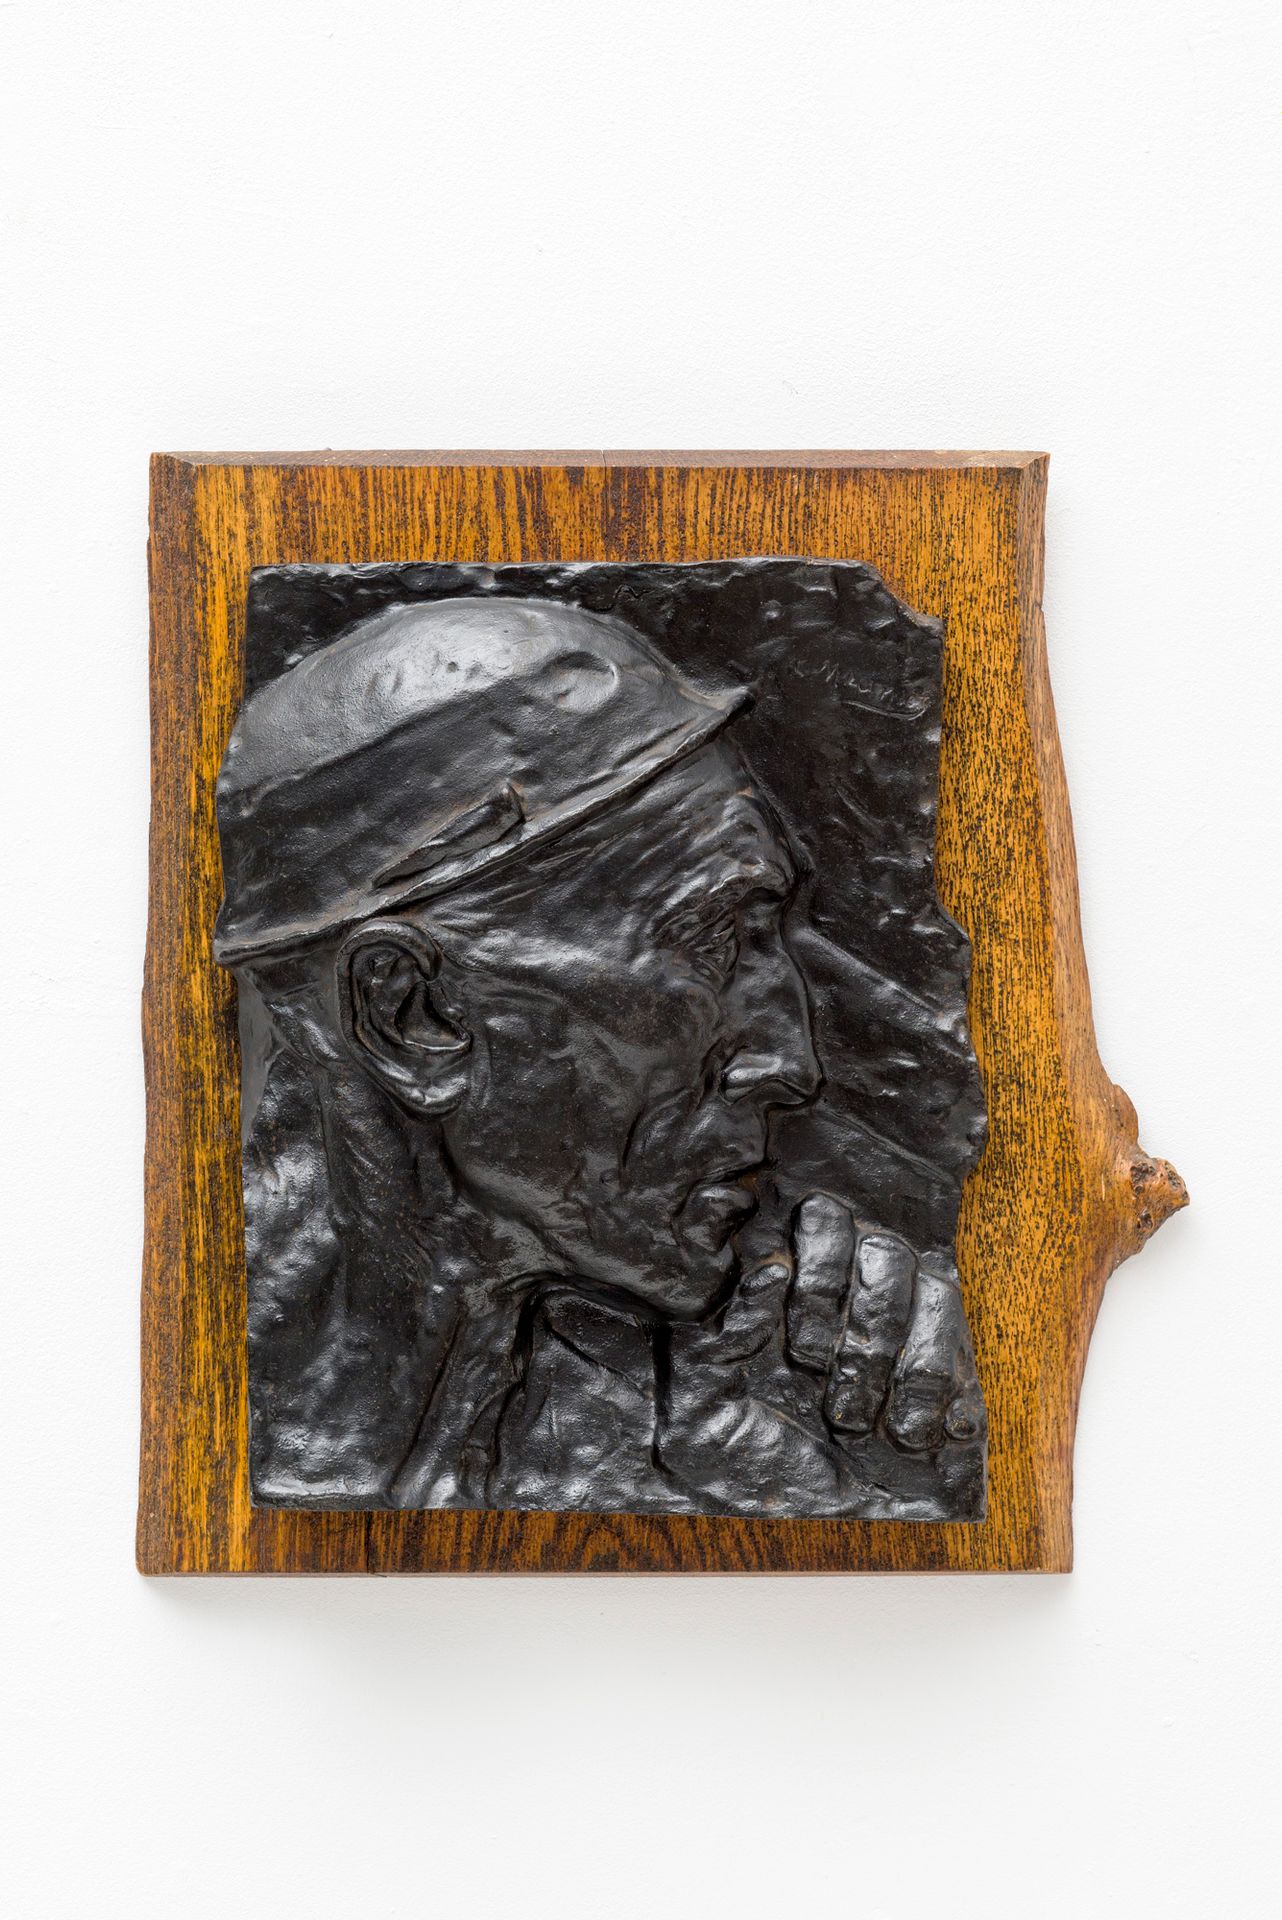 CONSTANTIN MEUNIER (1831-1905) 未成年人的资料

右上方有签名
木板上有深色铜锈的青铜器

右边的人
漆黑的铜板上有暗色的光泽

&hellip;